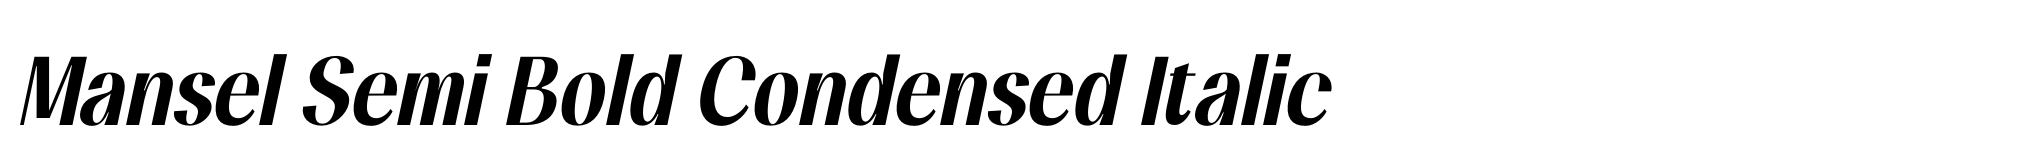 Mansel Semi Bold Condensed Italic image